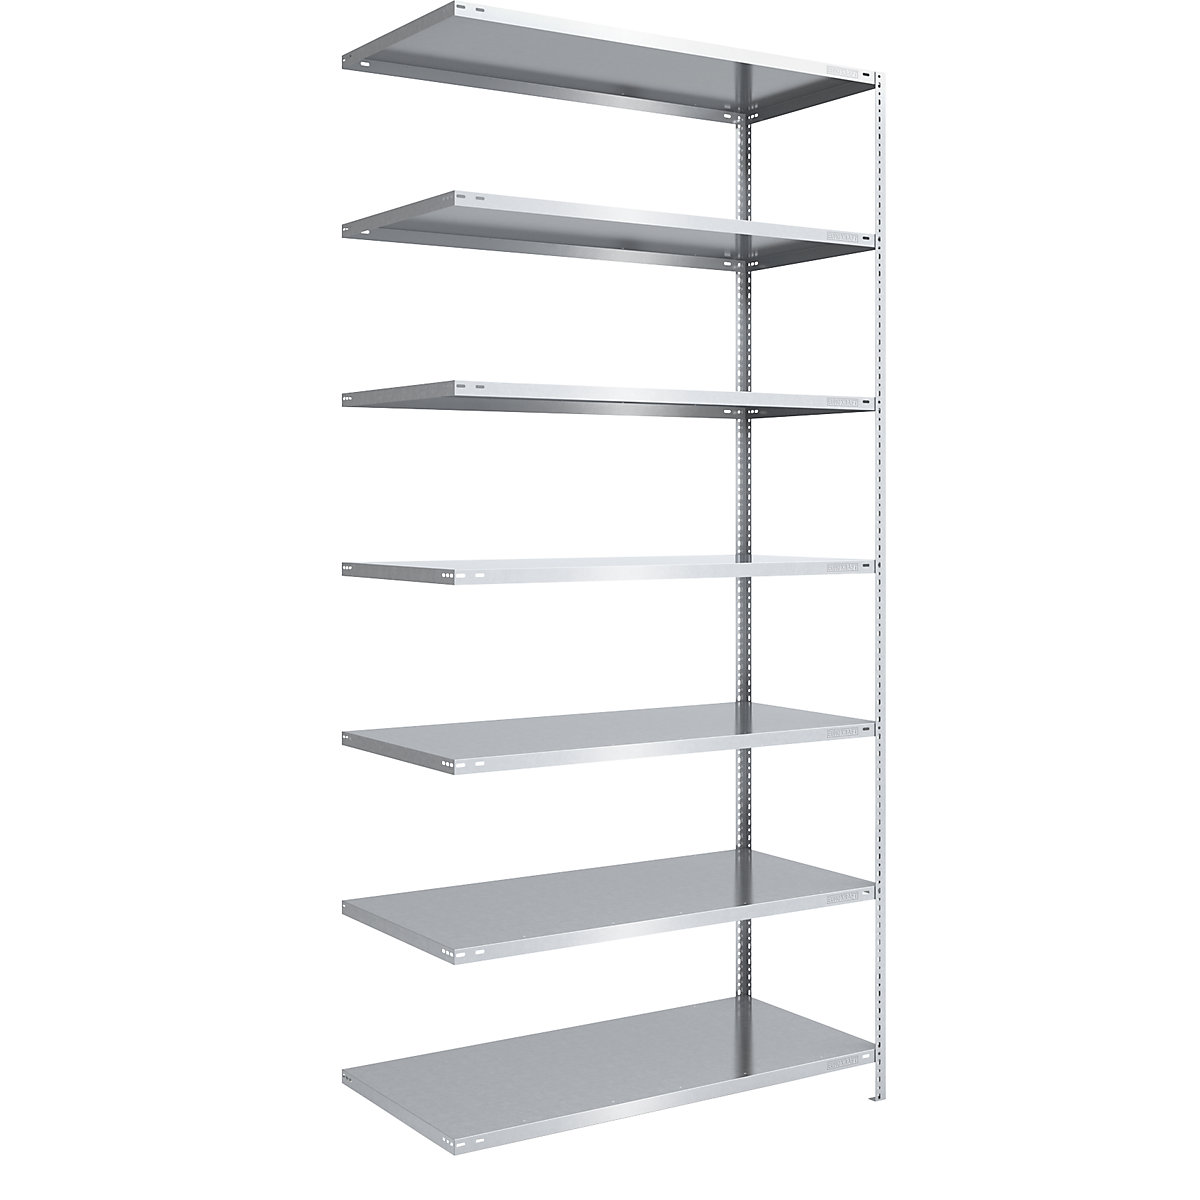 Bolt-together shelf unit, light duty, zinc plated – eurokraft pro, shelf unit height 3000 mm, shelf width 1300 mm, depth 800 mm, extension shelf unit-6